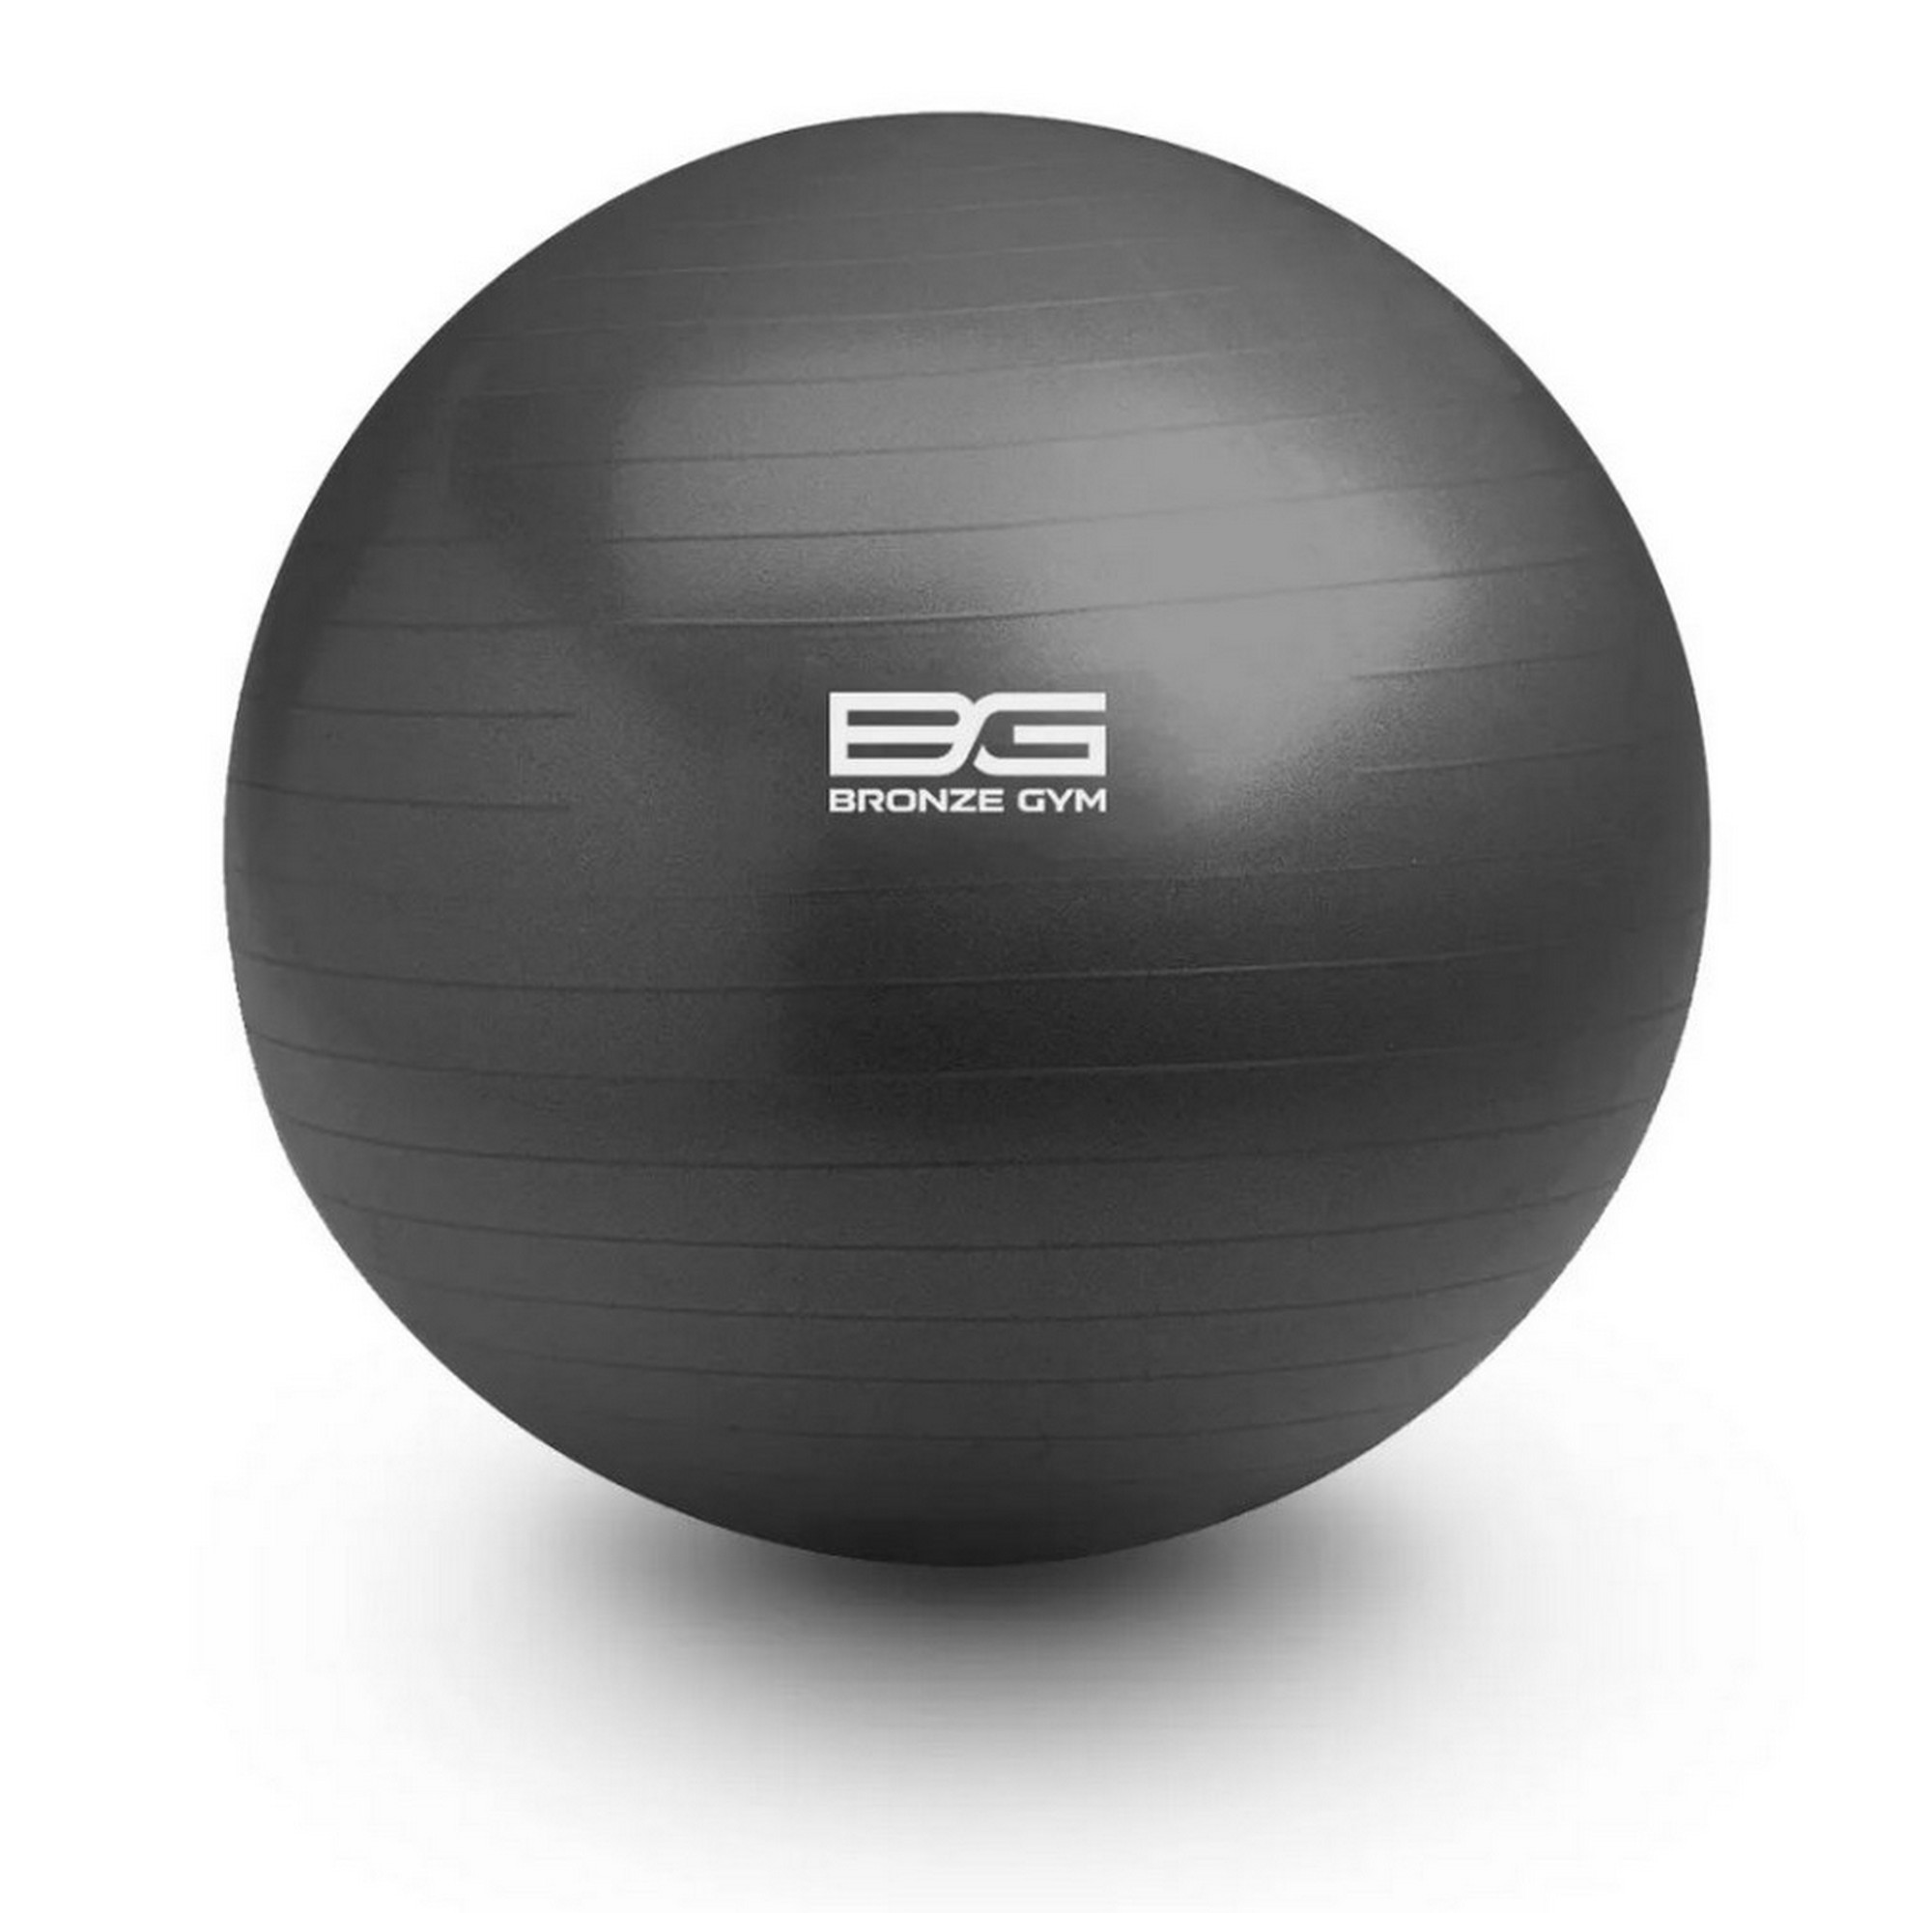   d55 Bronze Gym GYM BALL ANTI-BURST BG-FA-GB55